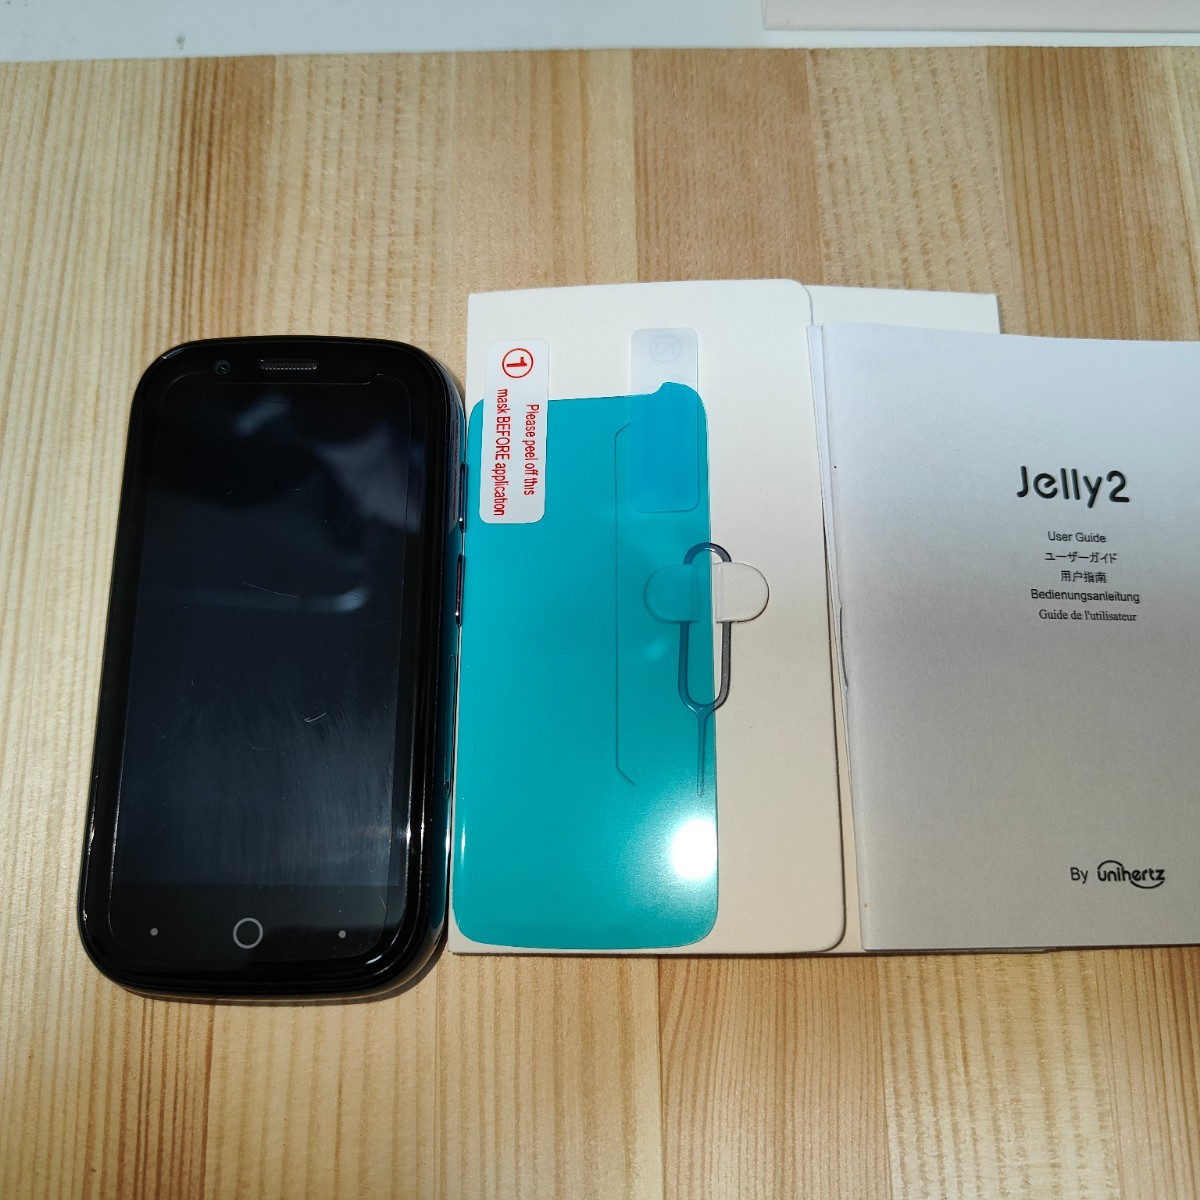 Unihertz - Jelly 2 世界最小Felica機能搭載スマートフォン Android 11搭載 おサイフケータイ中古_画像2